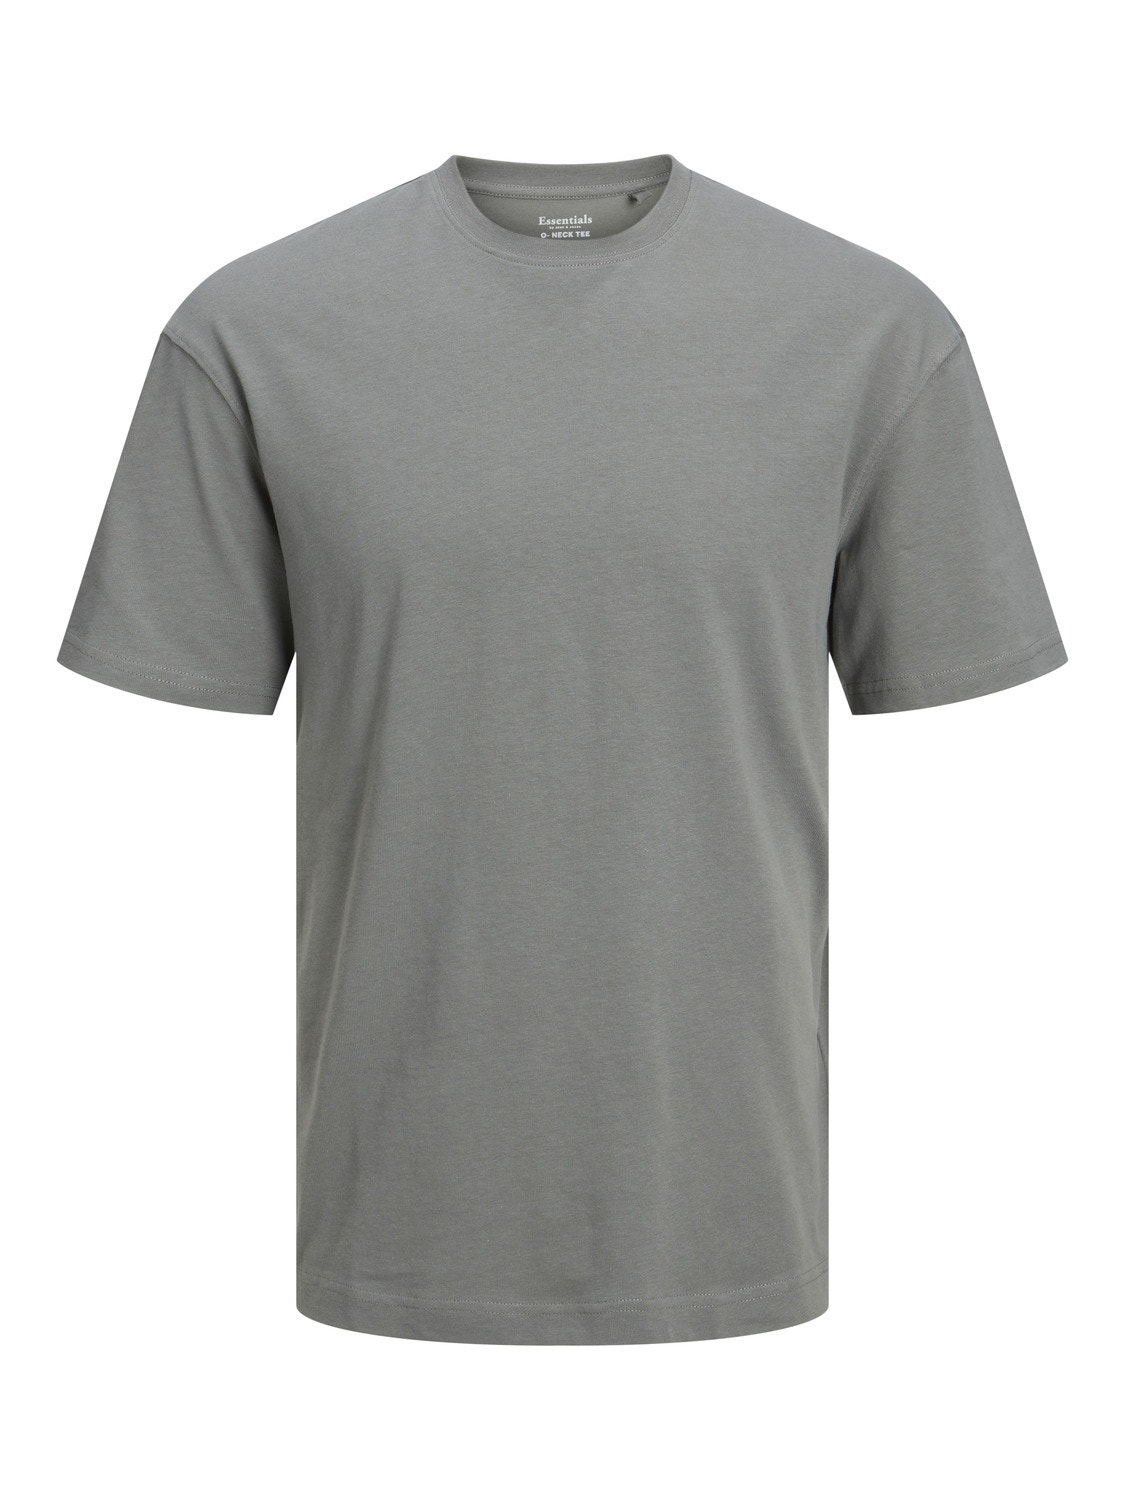 Jack & Jones Plain Crew neck T-shirt -Sedona Sage - 12190467